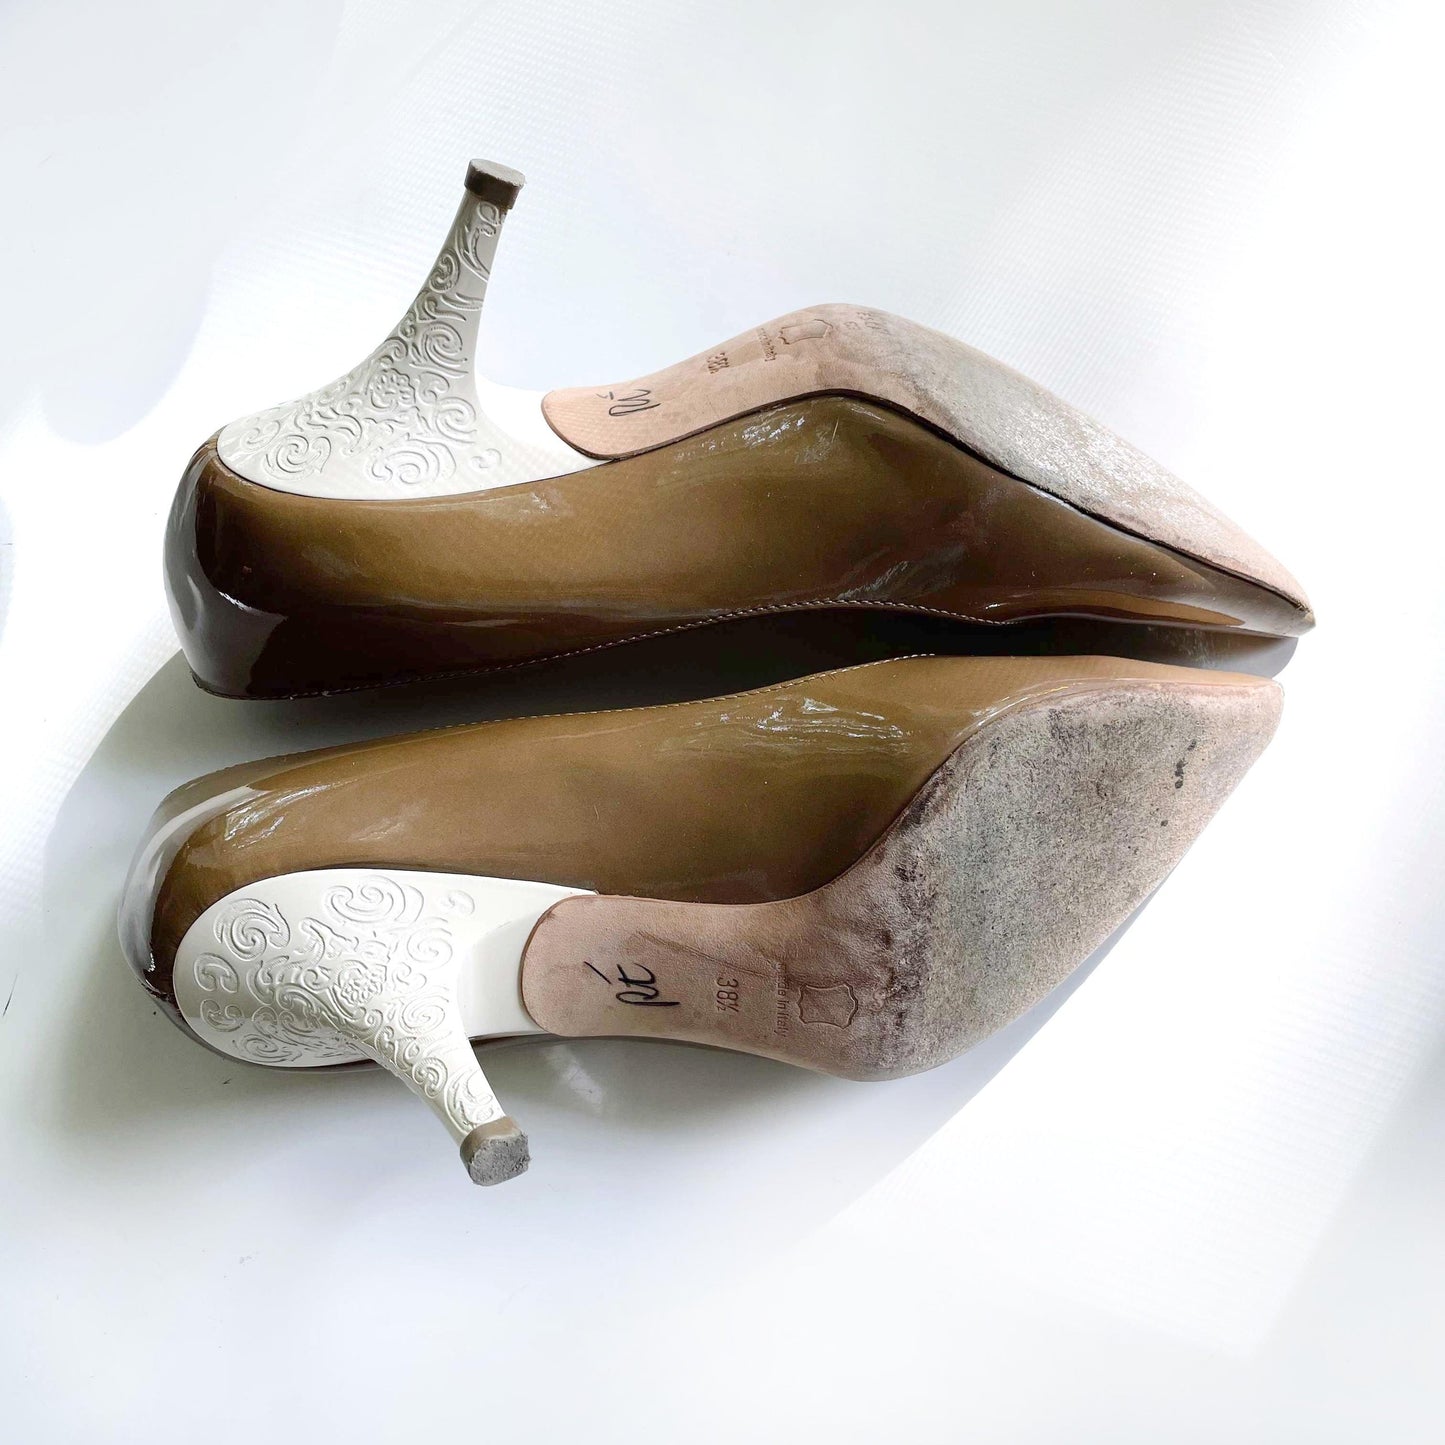 escada nude patent heel with white heel - size 38.5